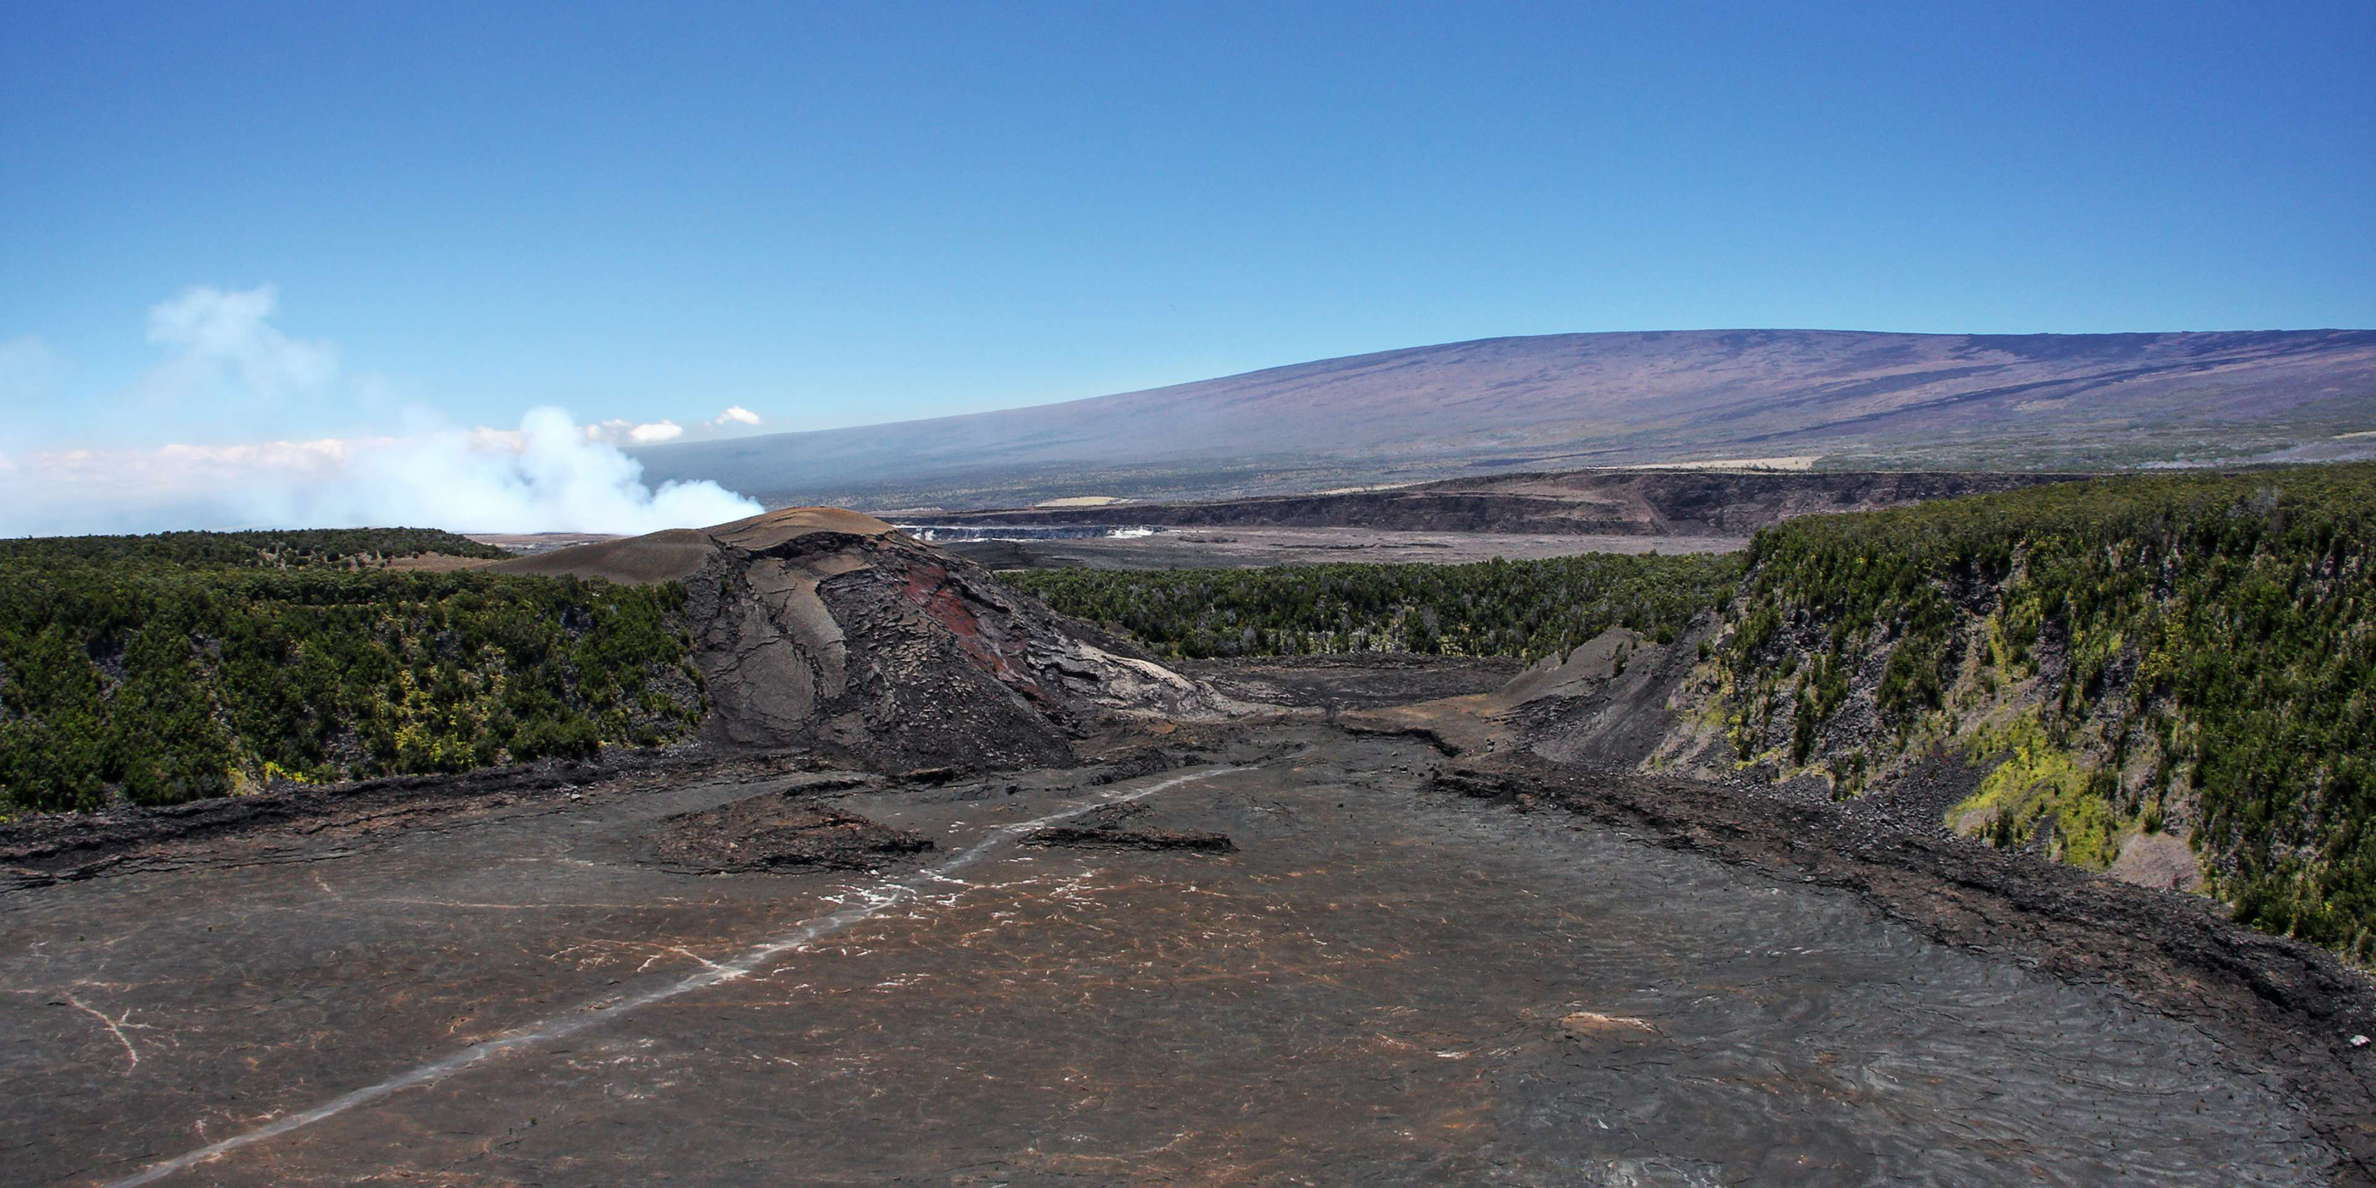 Hawai'i Volcanoes NP  |  Kīlauea Iki and Mauna Loa